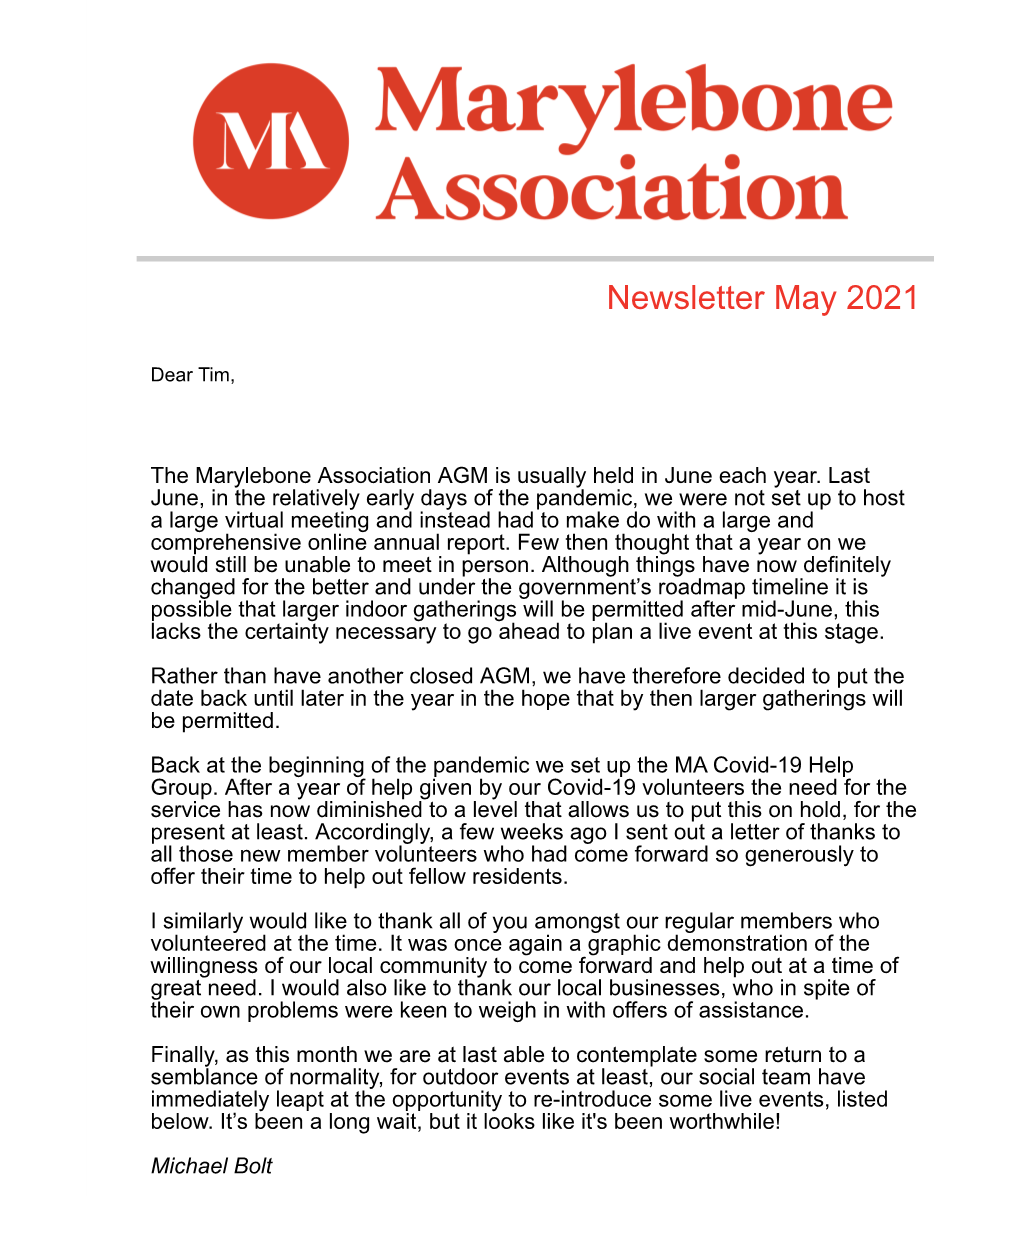 The Marylebone Association Newsletter May 2021